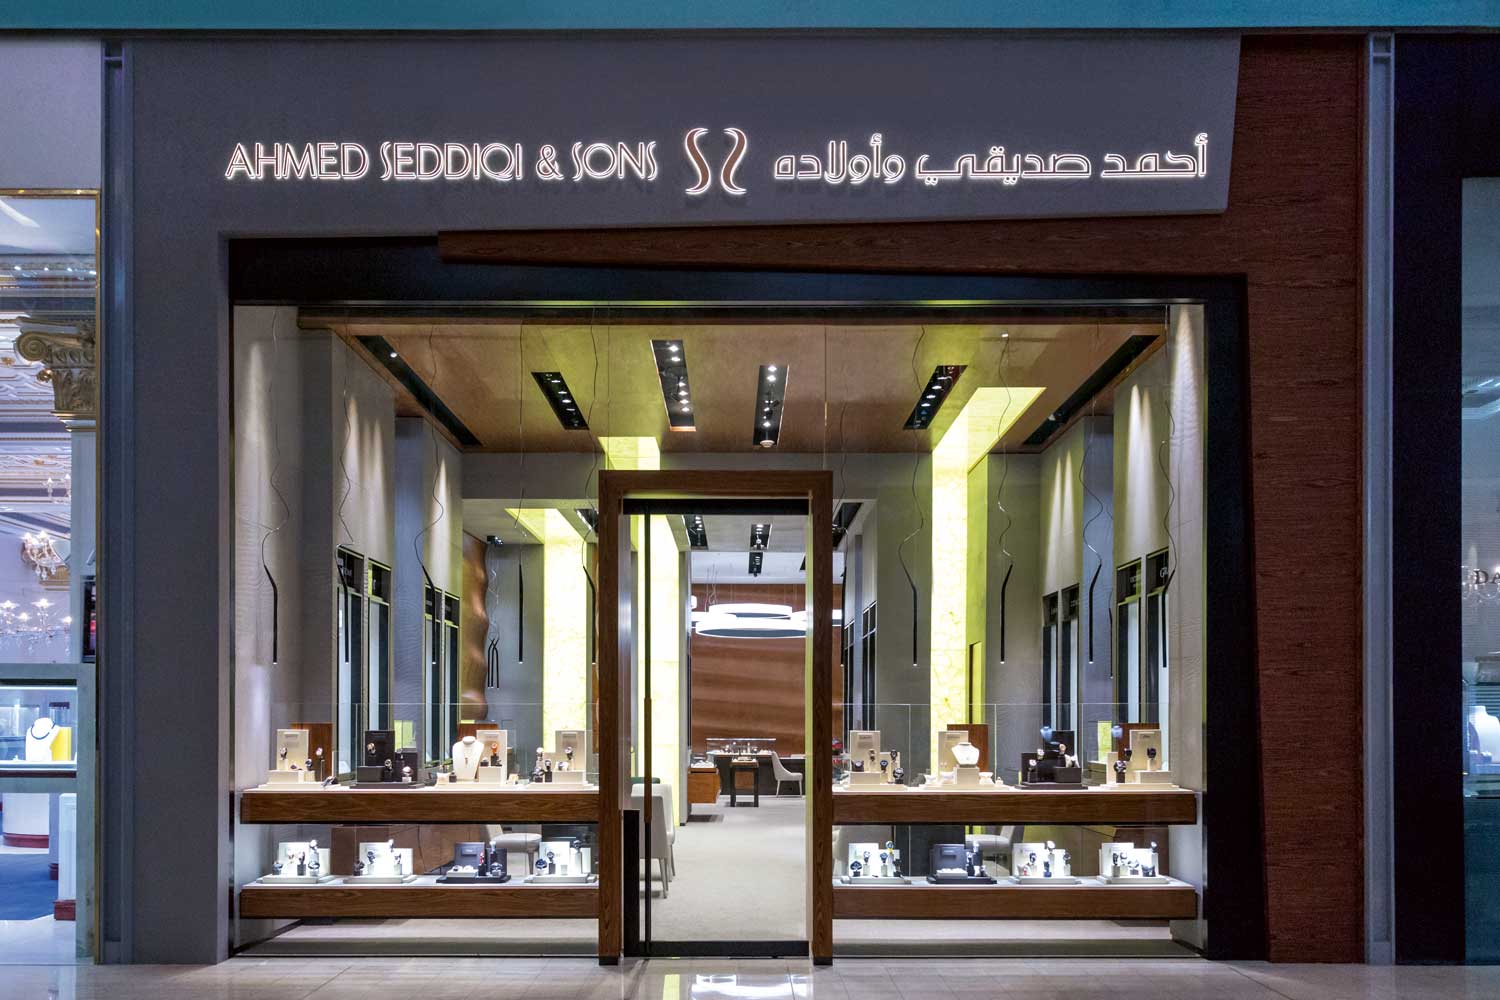 Ahmed Seddiqi & Sons’ flagship store in Dubai Mall